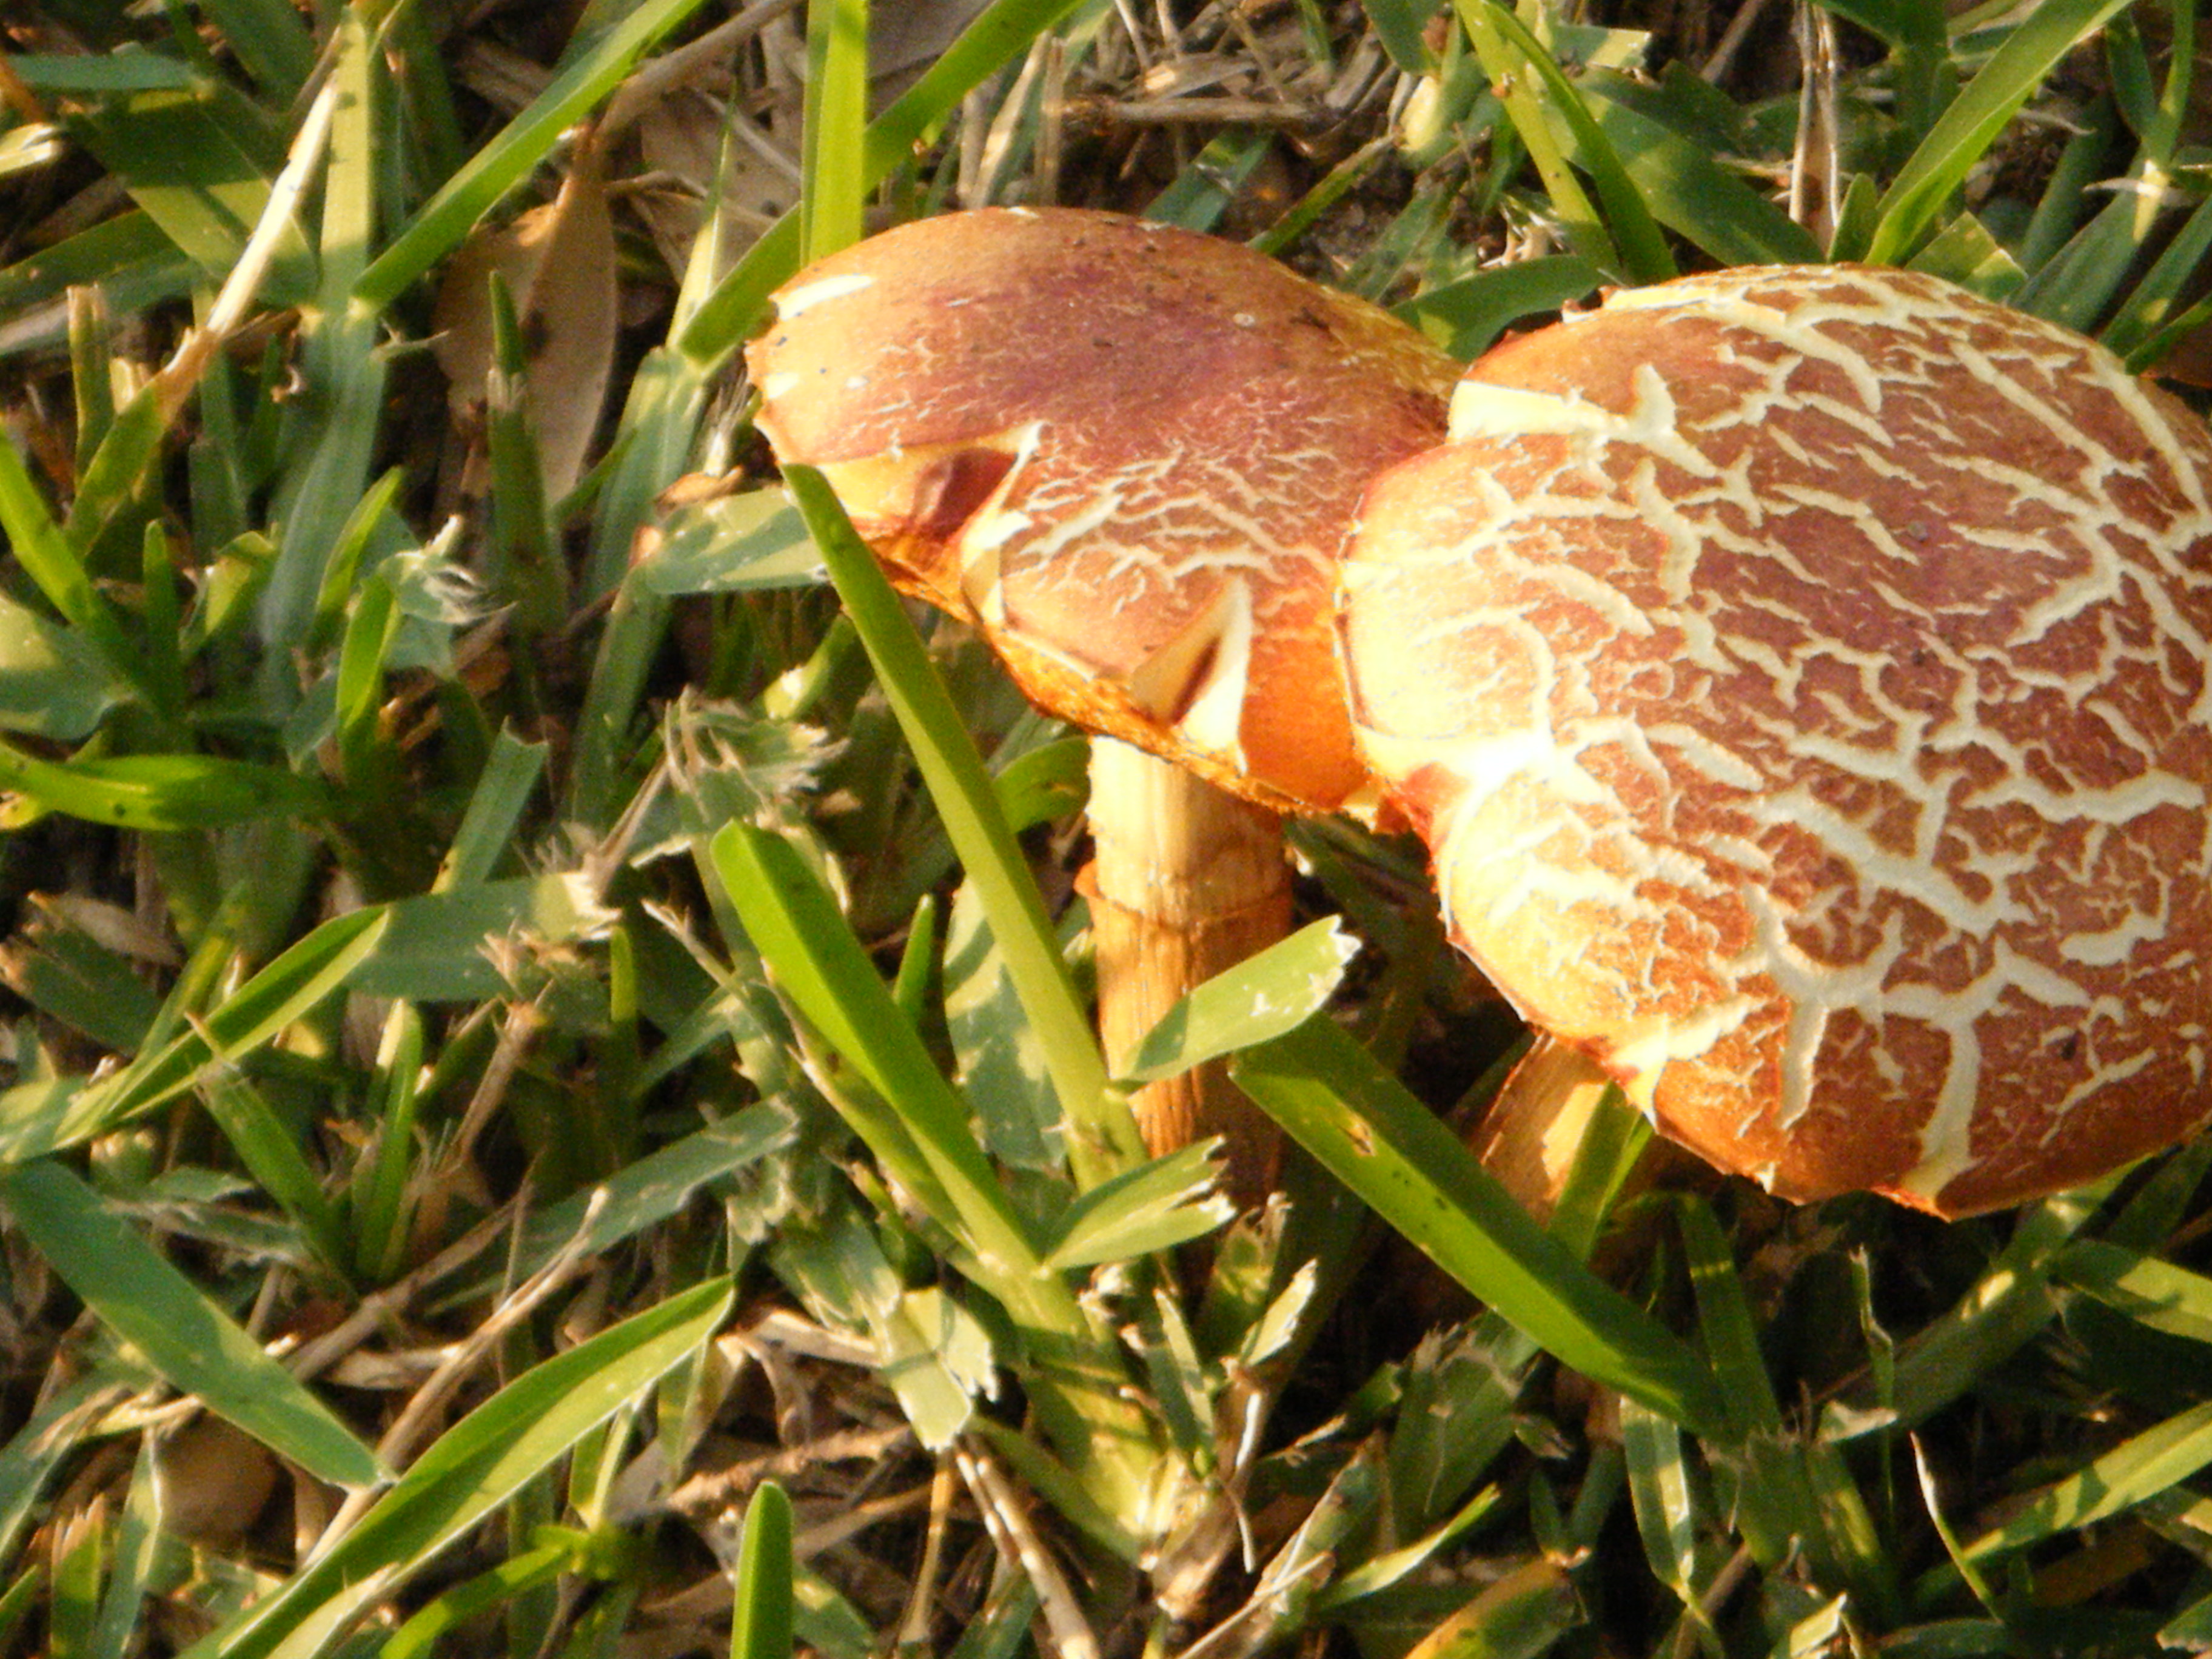 File:Wild Mushrooms.jpg - Wikimedia Commons